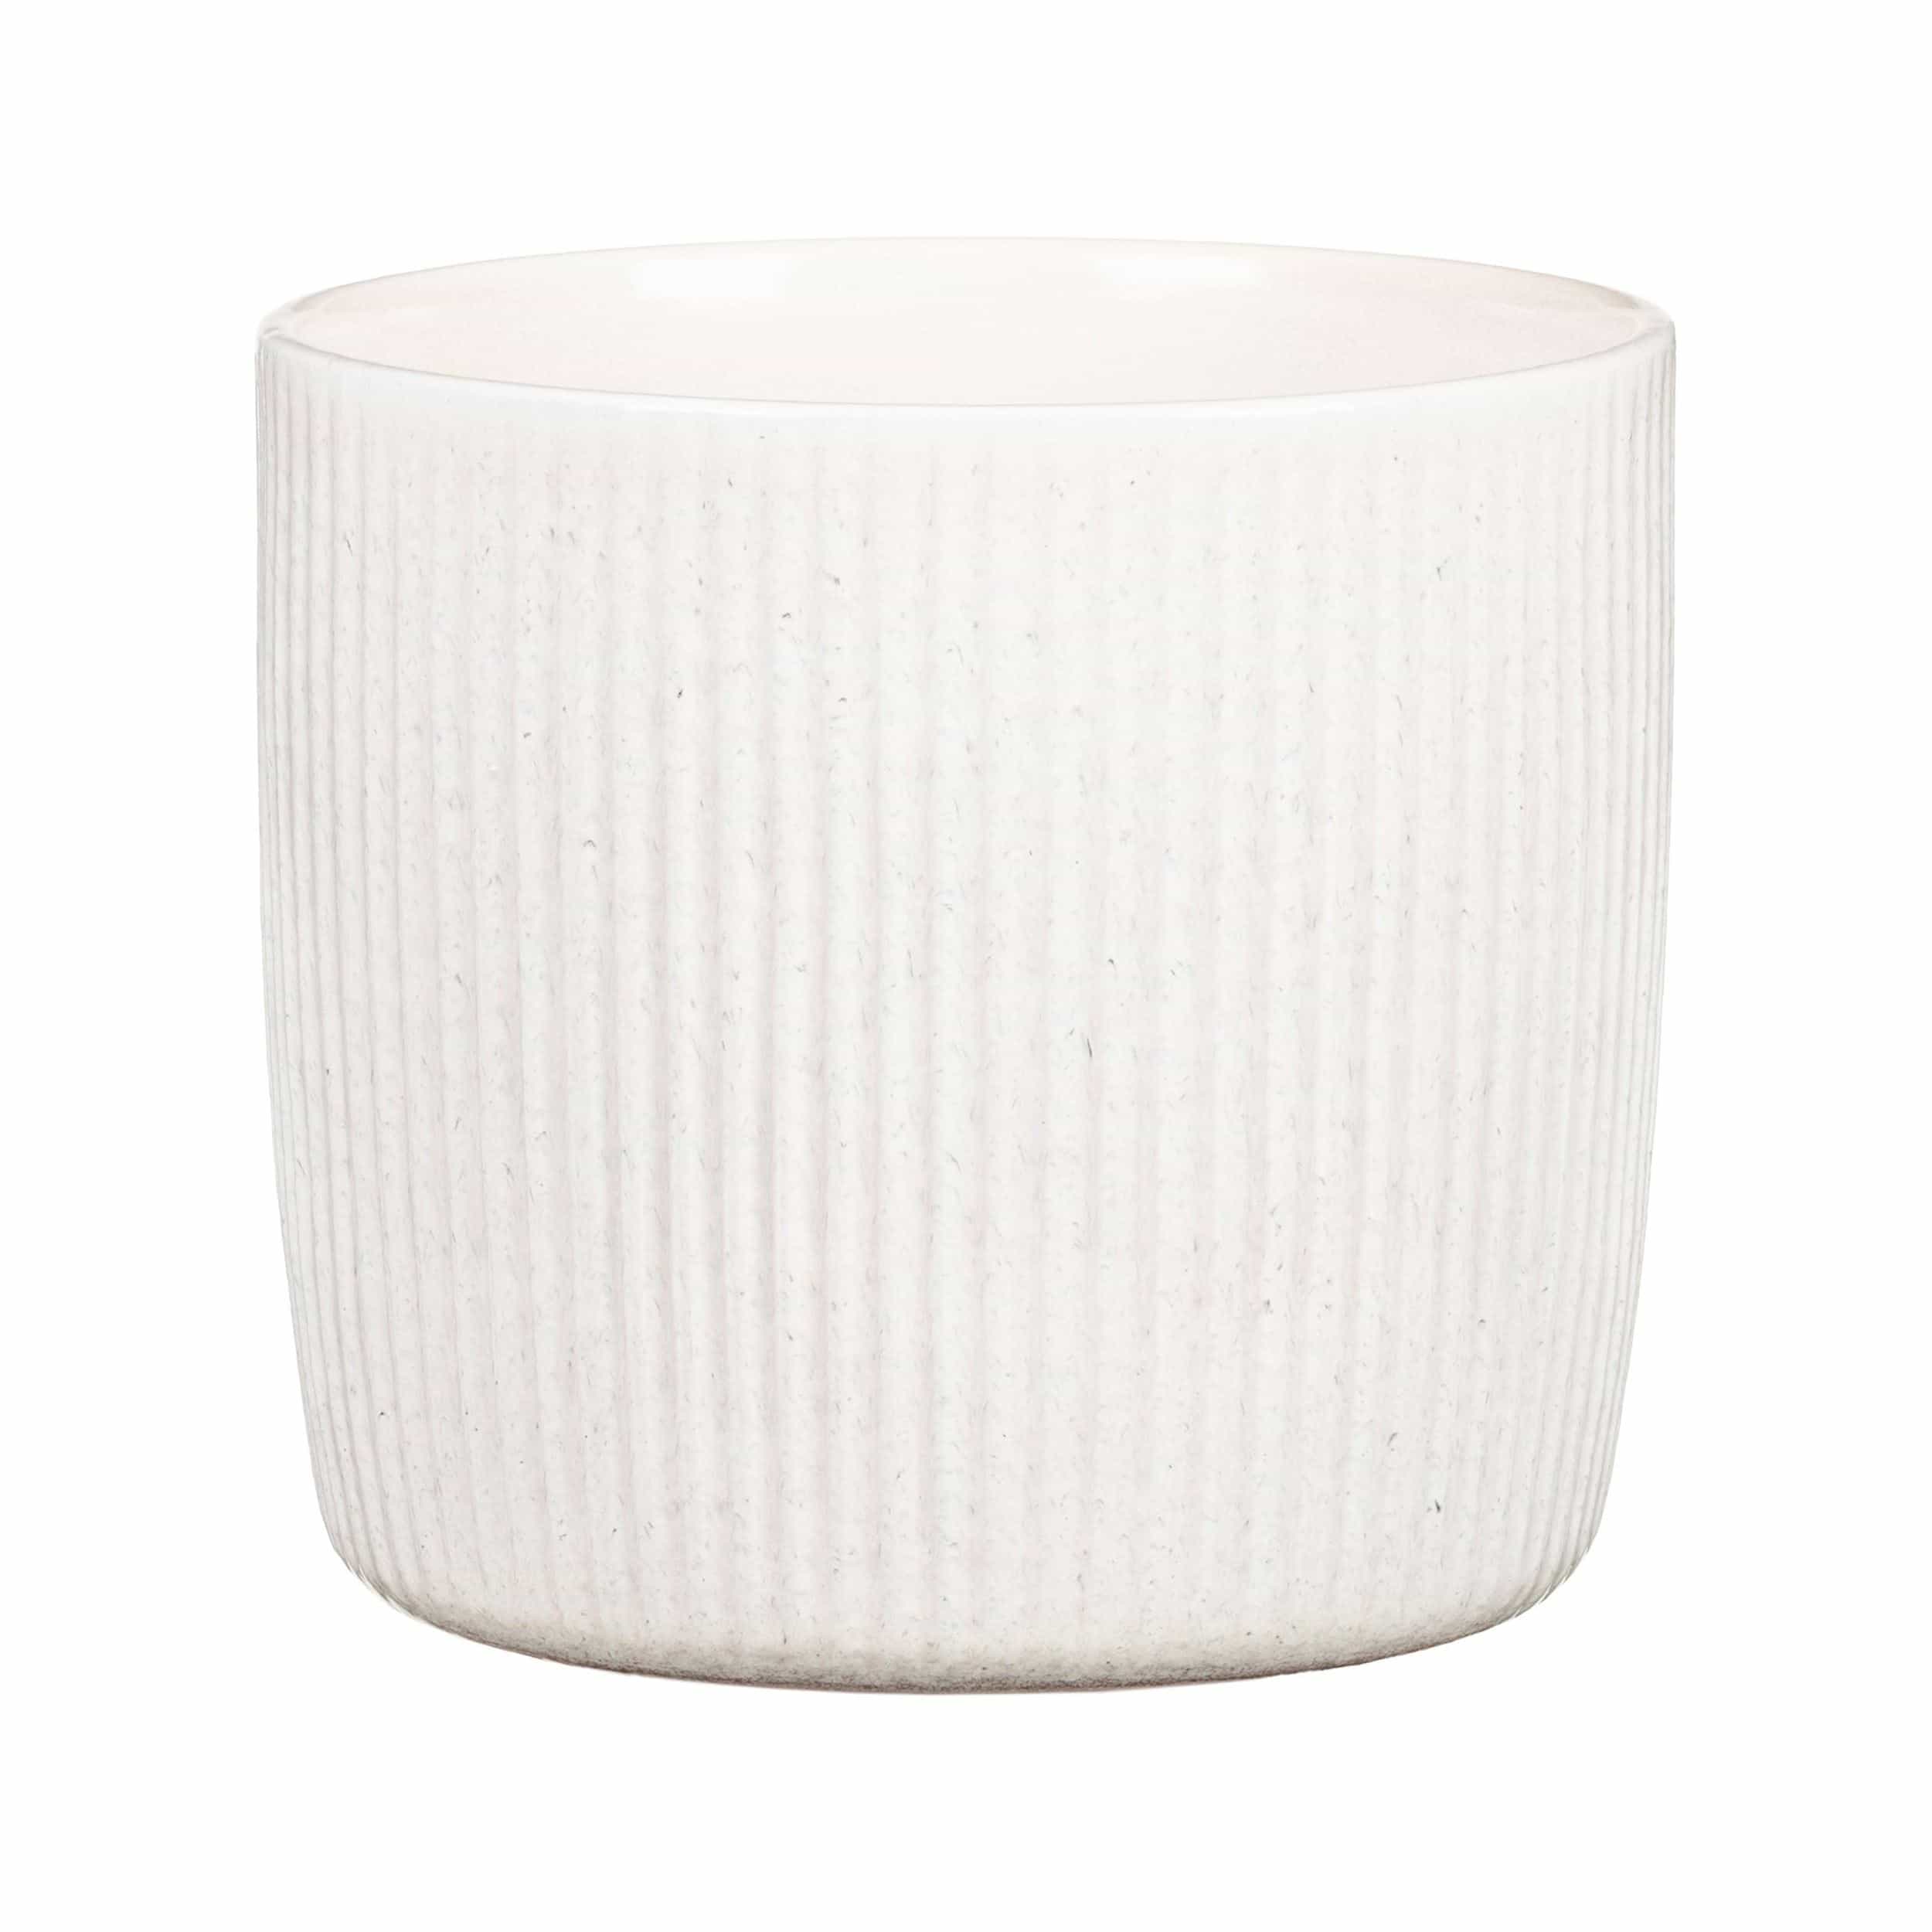 Keramik-Blumentopf Solido Linea D18 cm weiß